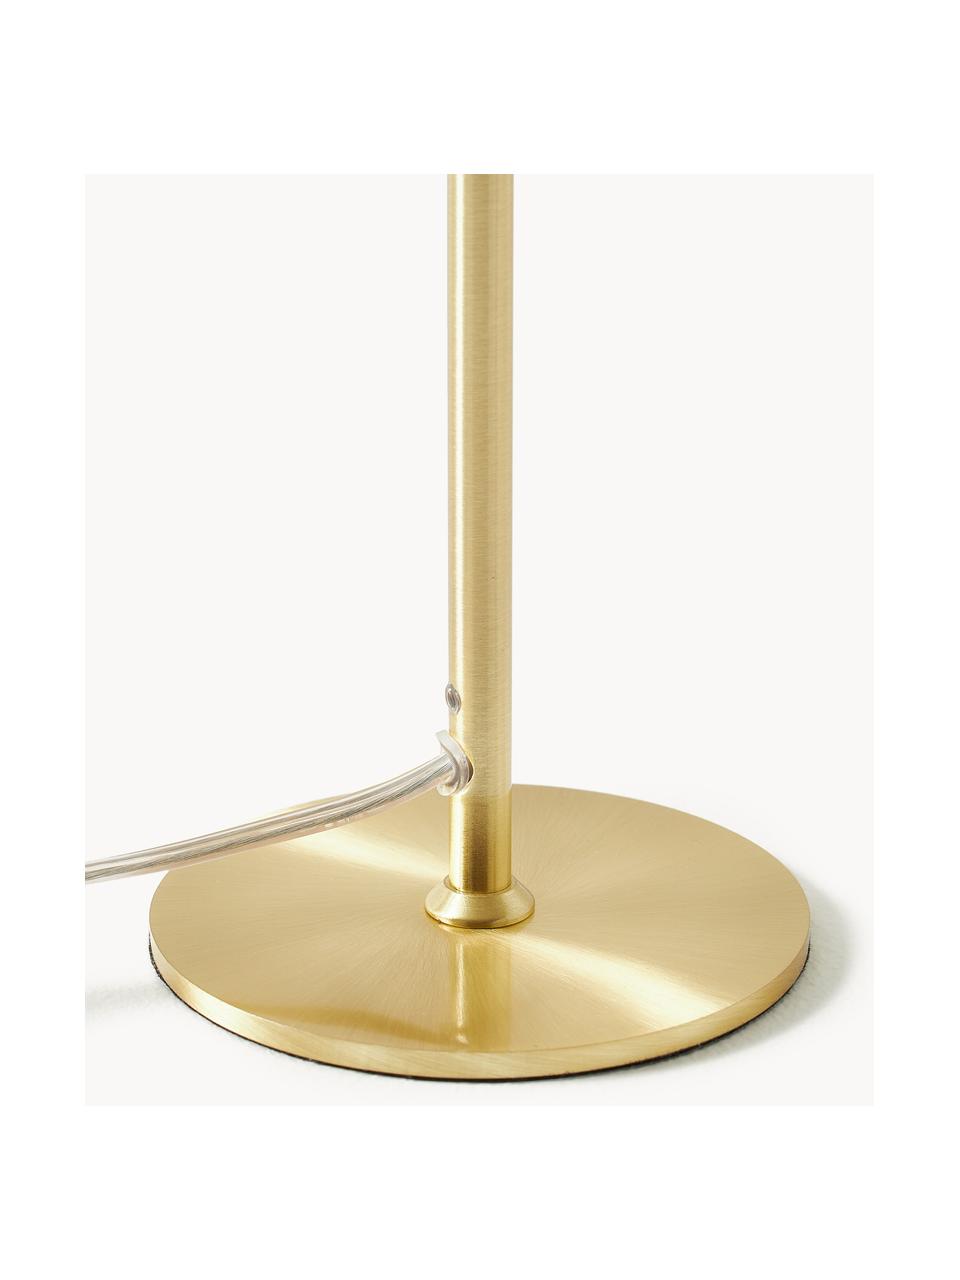 Lámpara de mesa Mathea, Pantalla: metal con pintura en polv, Cable: plástico, Blanco, dorado, Ø 23 x Al 36 cm